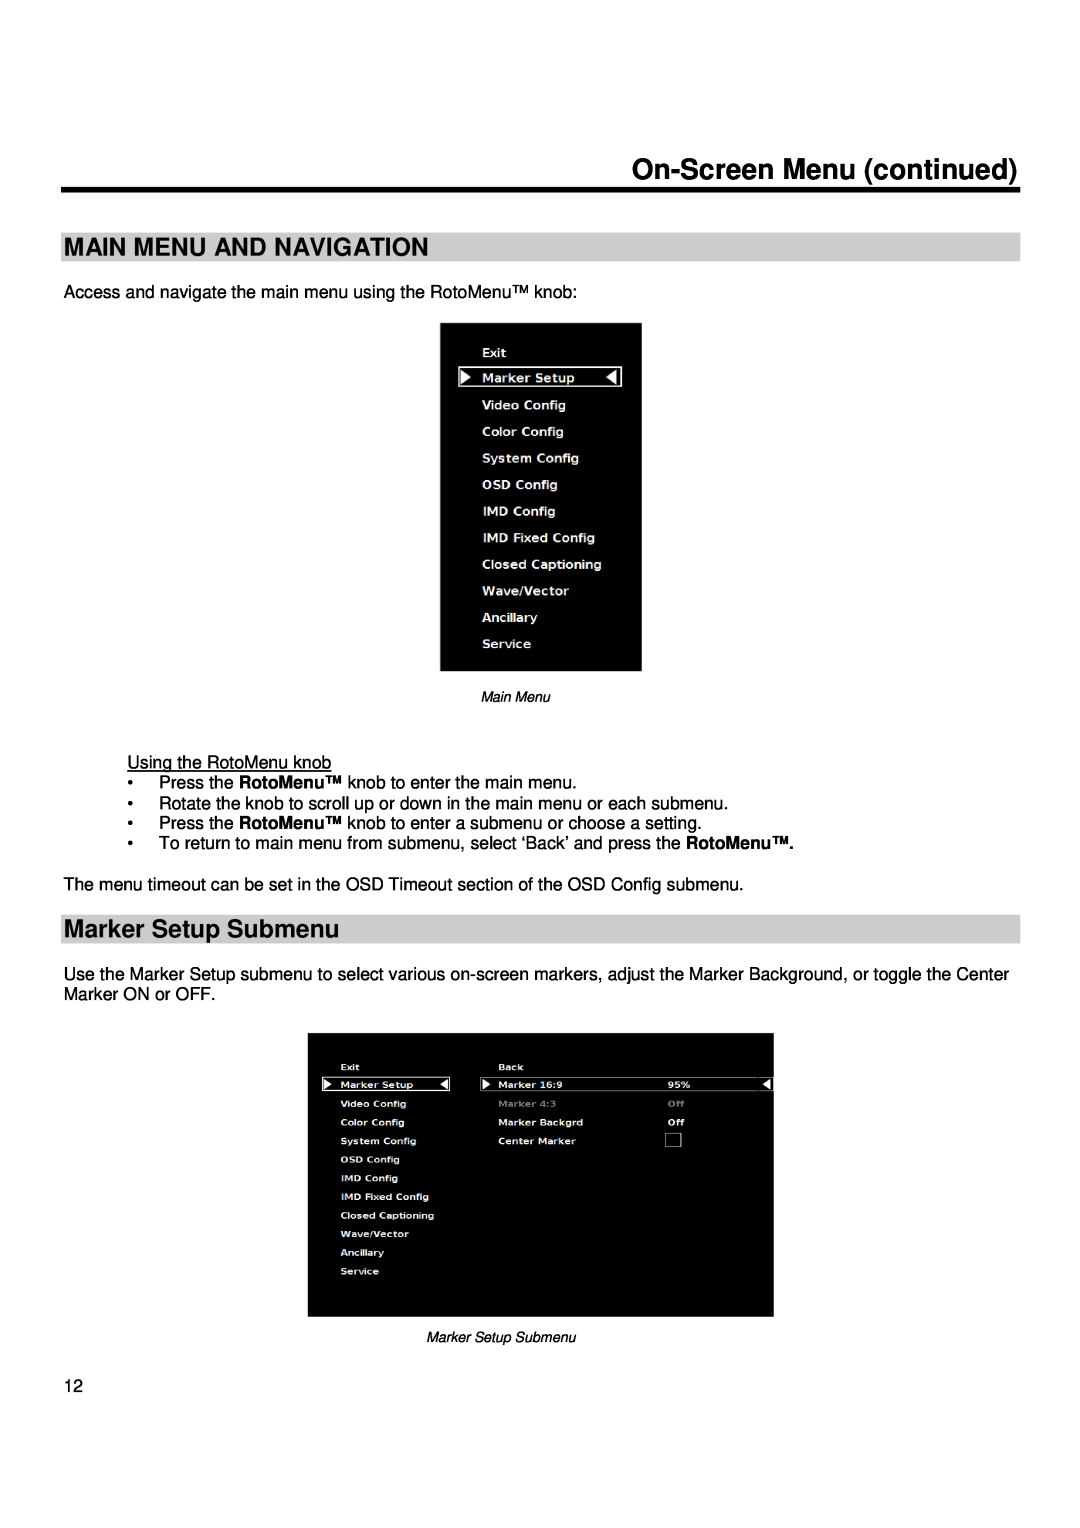 Marshall electronic V-R241-DLW manual On-Screen Menu continued, Main Menu And Navigation, Marker Setup Submenu 